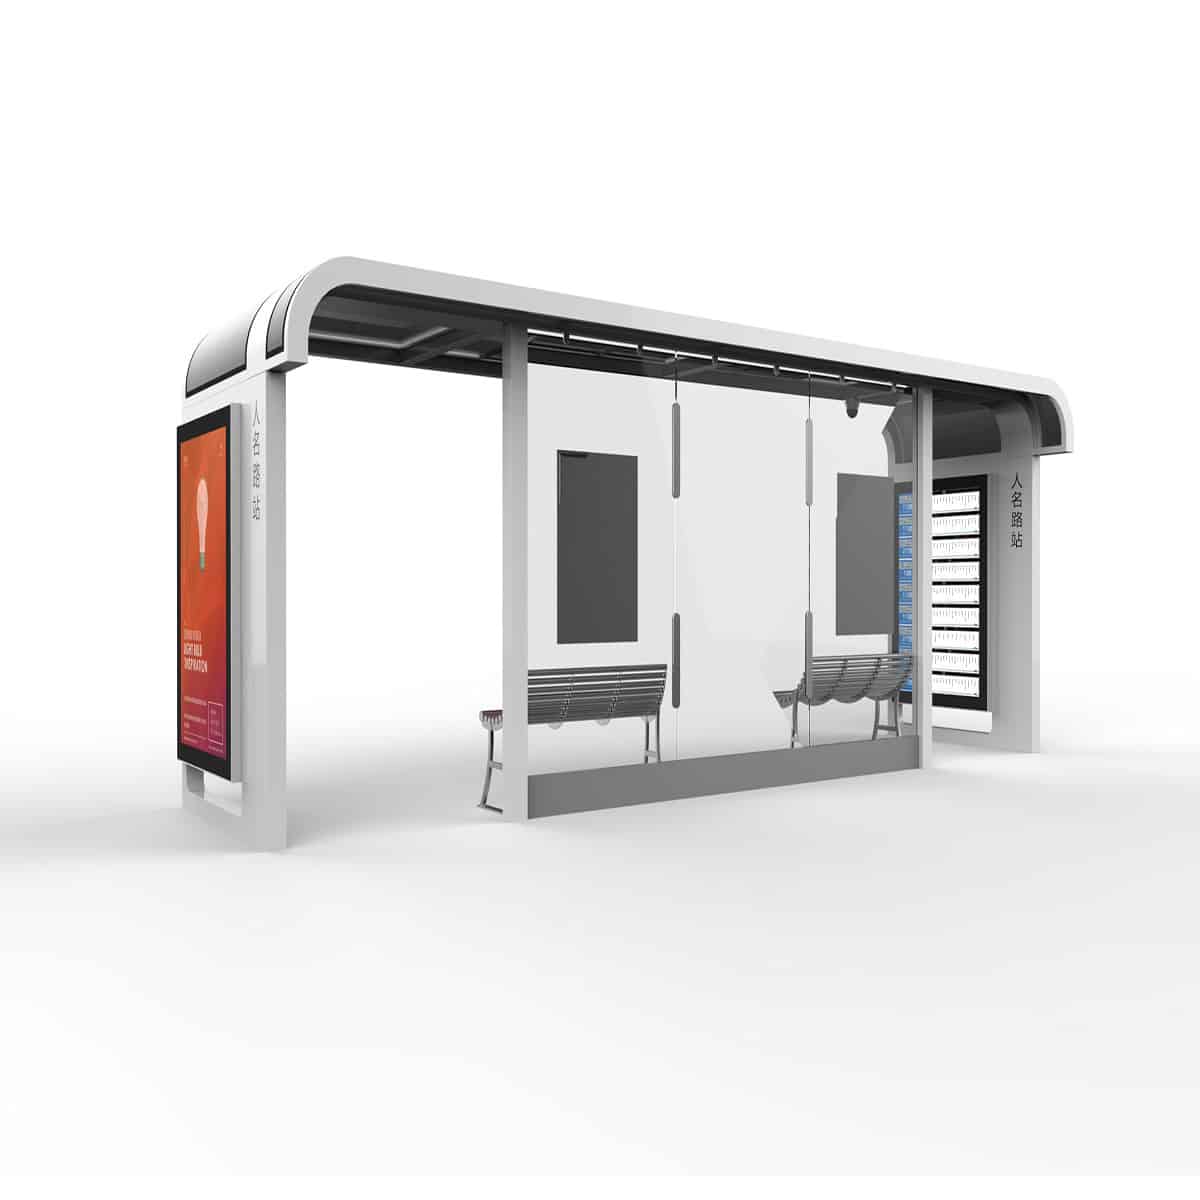 Intelligent Smart City Bus Shelter Solution for Urban Public Transport by Ampron - www.ampron.eu